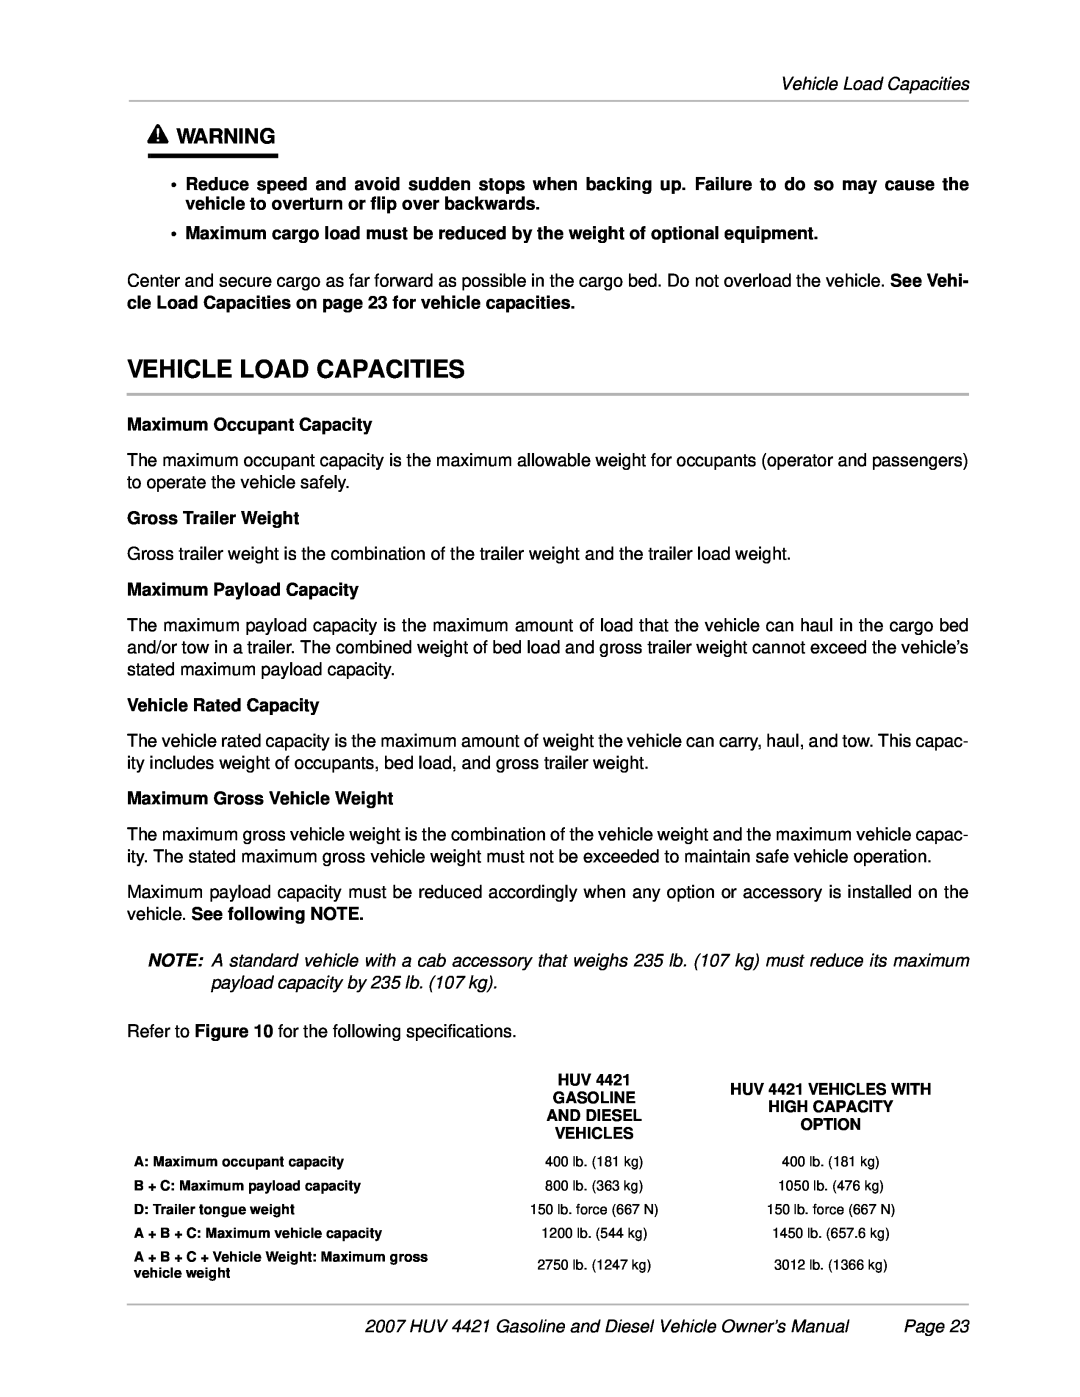 Husqvarna HUV 4421-D / DXP Vehicle Load Capacities, ý WARNING, HUV 4421 Gasoline and Diesel Vehicle Owner’s Manual, Page 